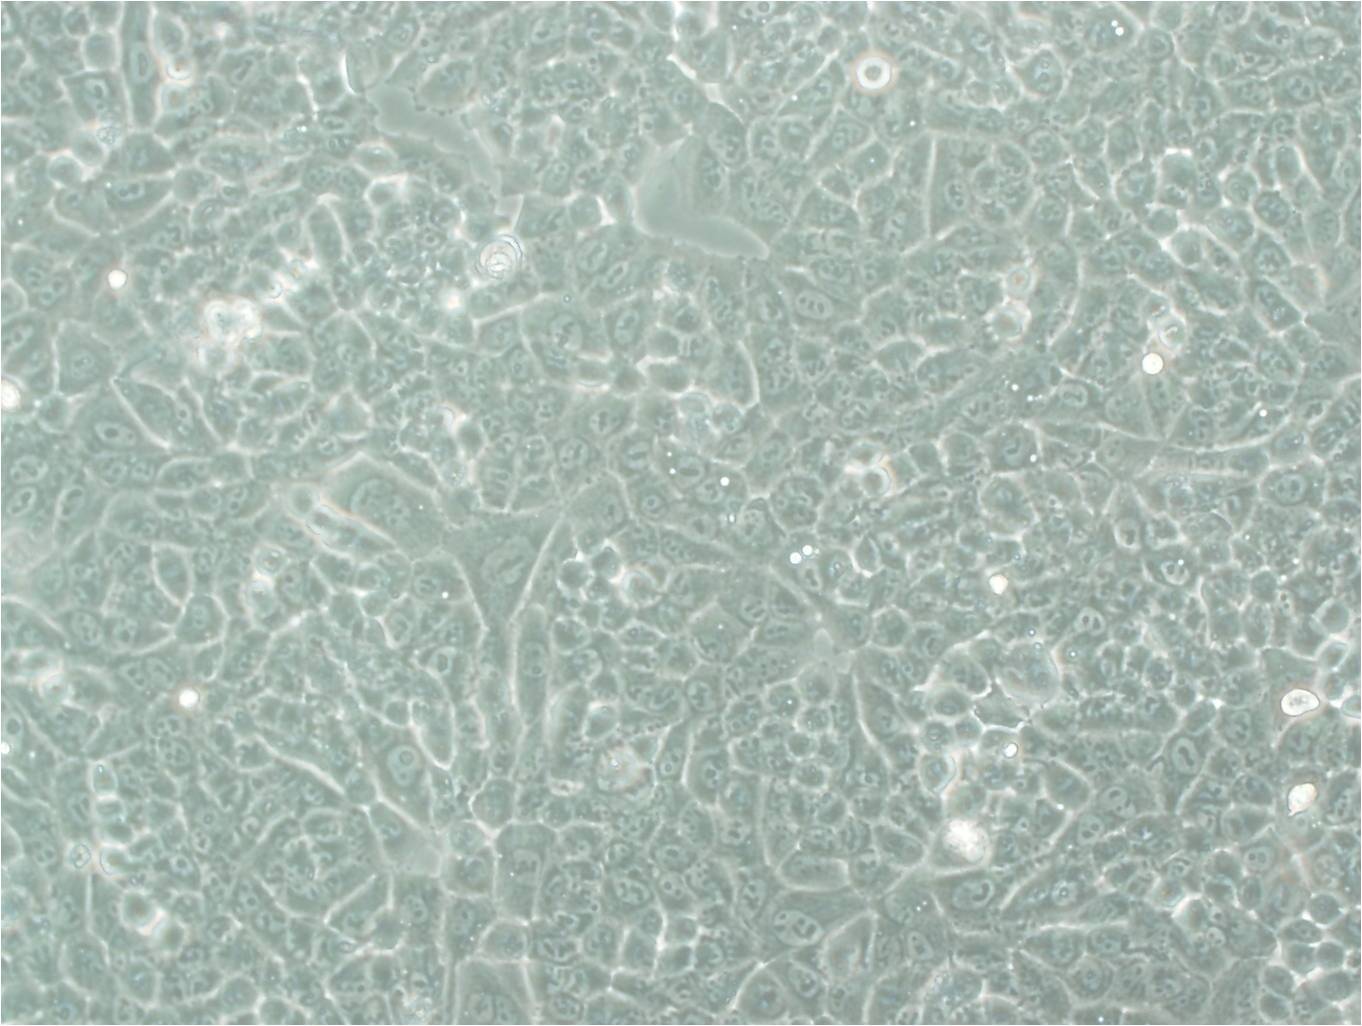 FO [Mouse myeloma]:小鼠骨髓瘤复苏细胞(提供STR鉴定图谱),FO [Mouse myeloma]